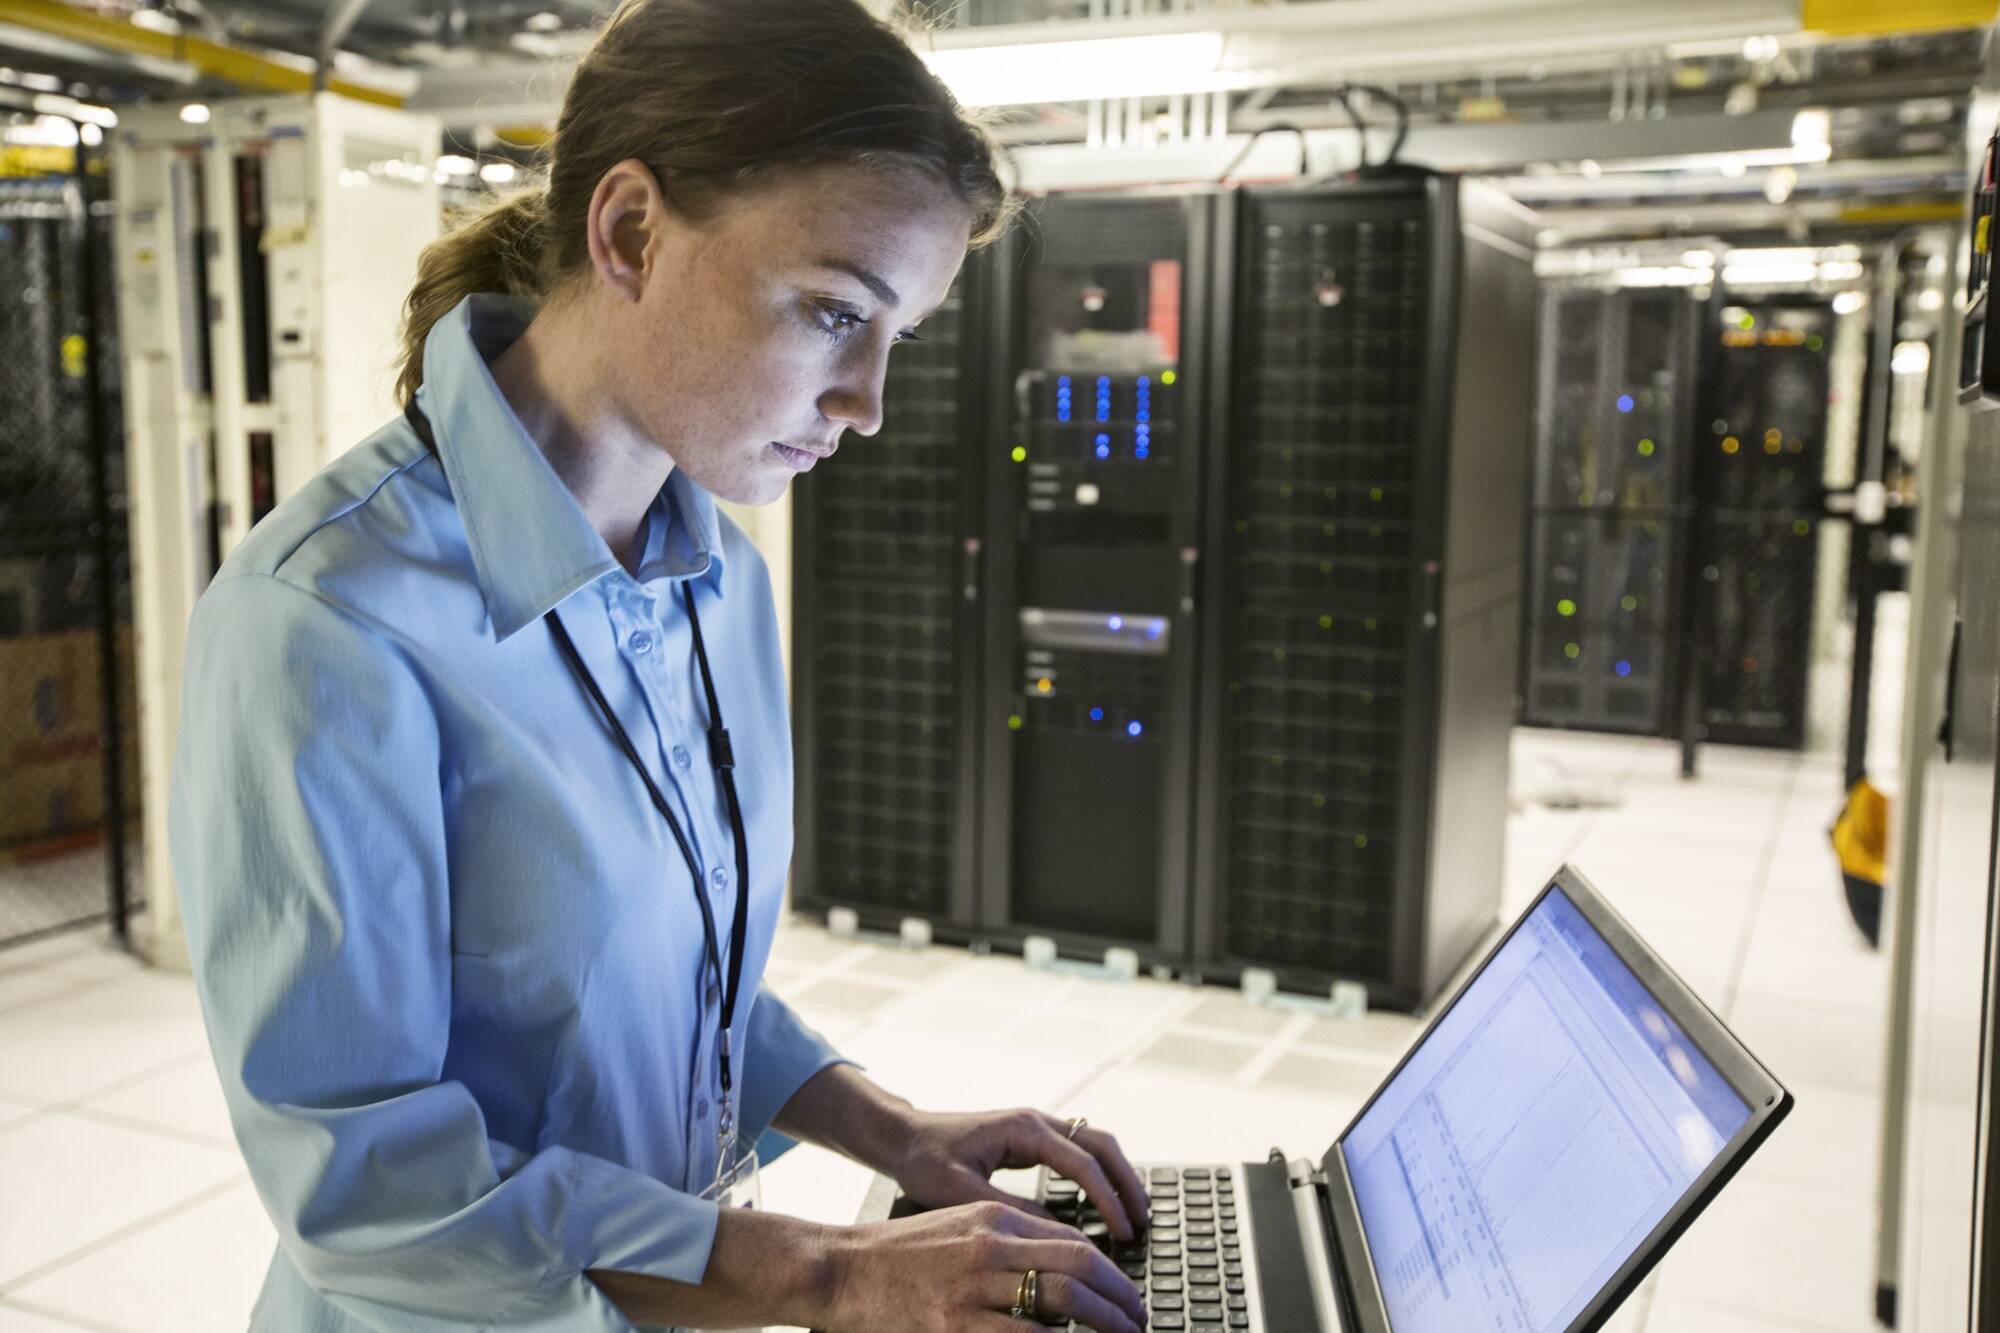 Caucasian woman technician running diagnostics on computer servers in a server farm.